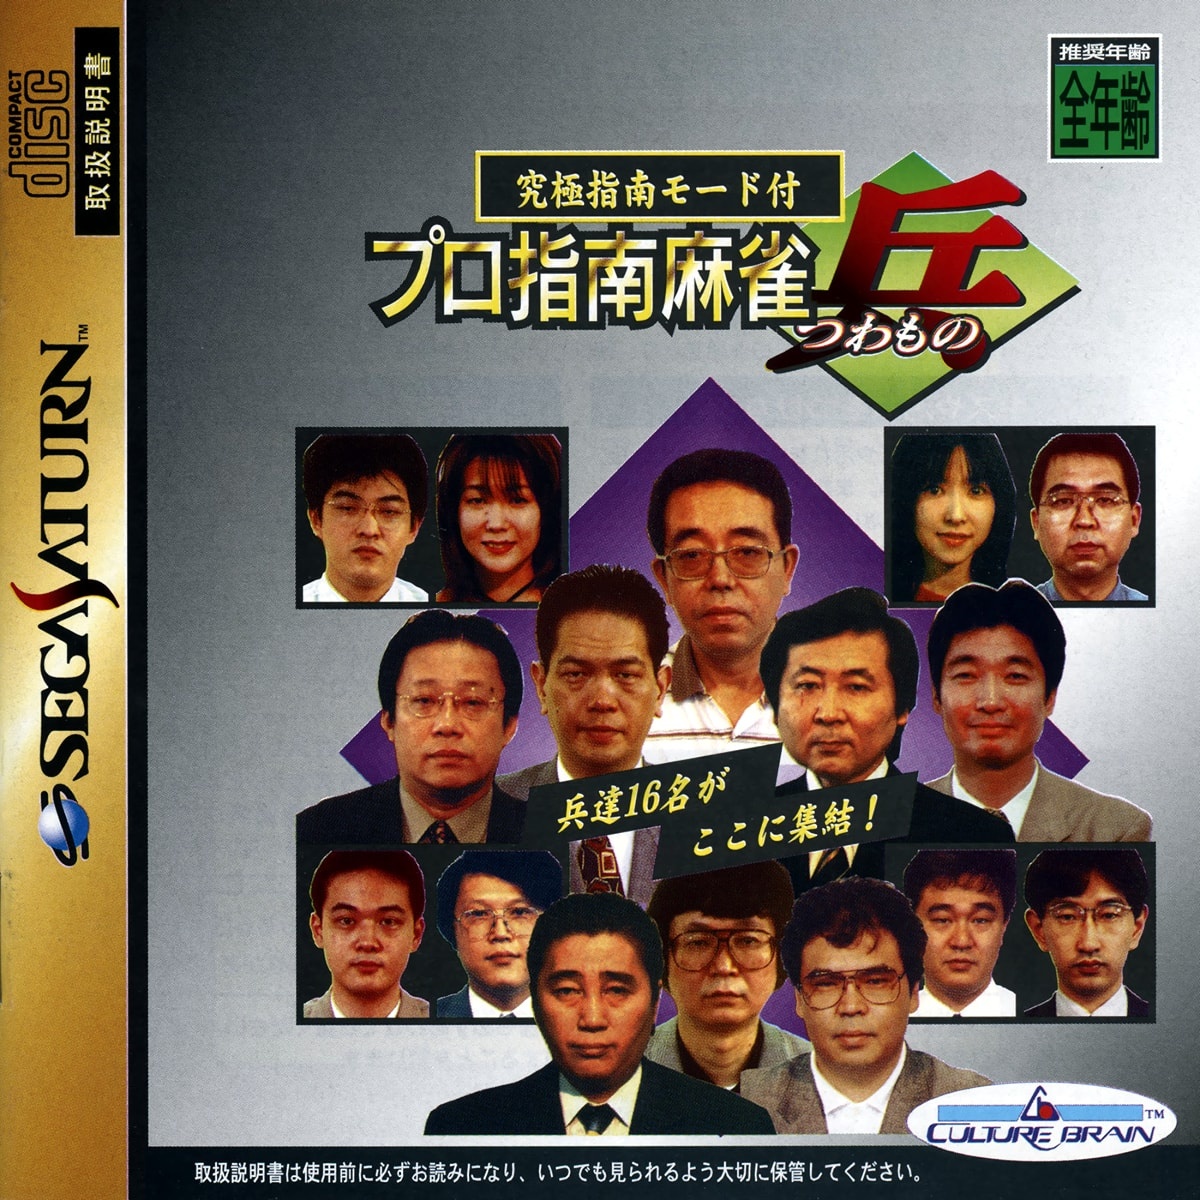 Capa do jogo Pro Shinan Mahjong "Tsuwamono"